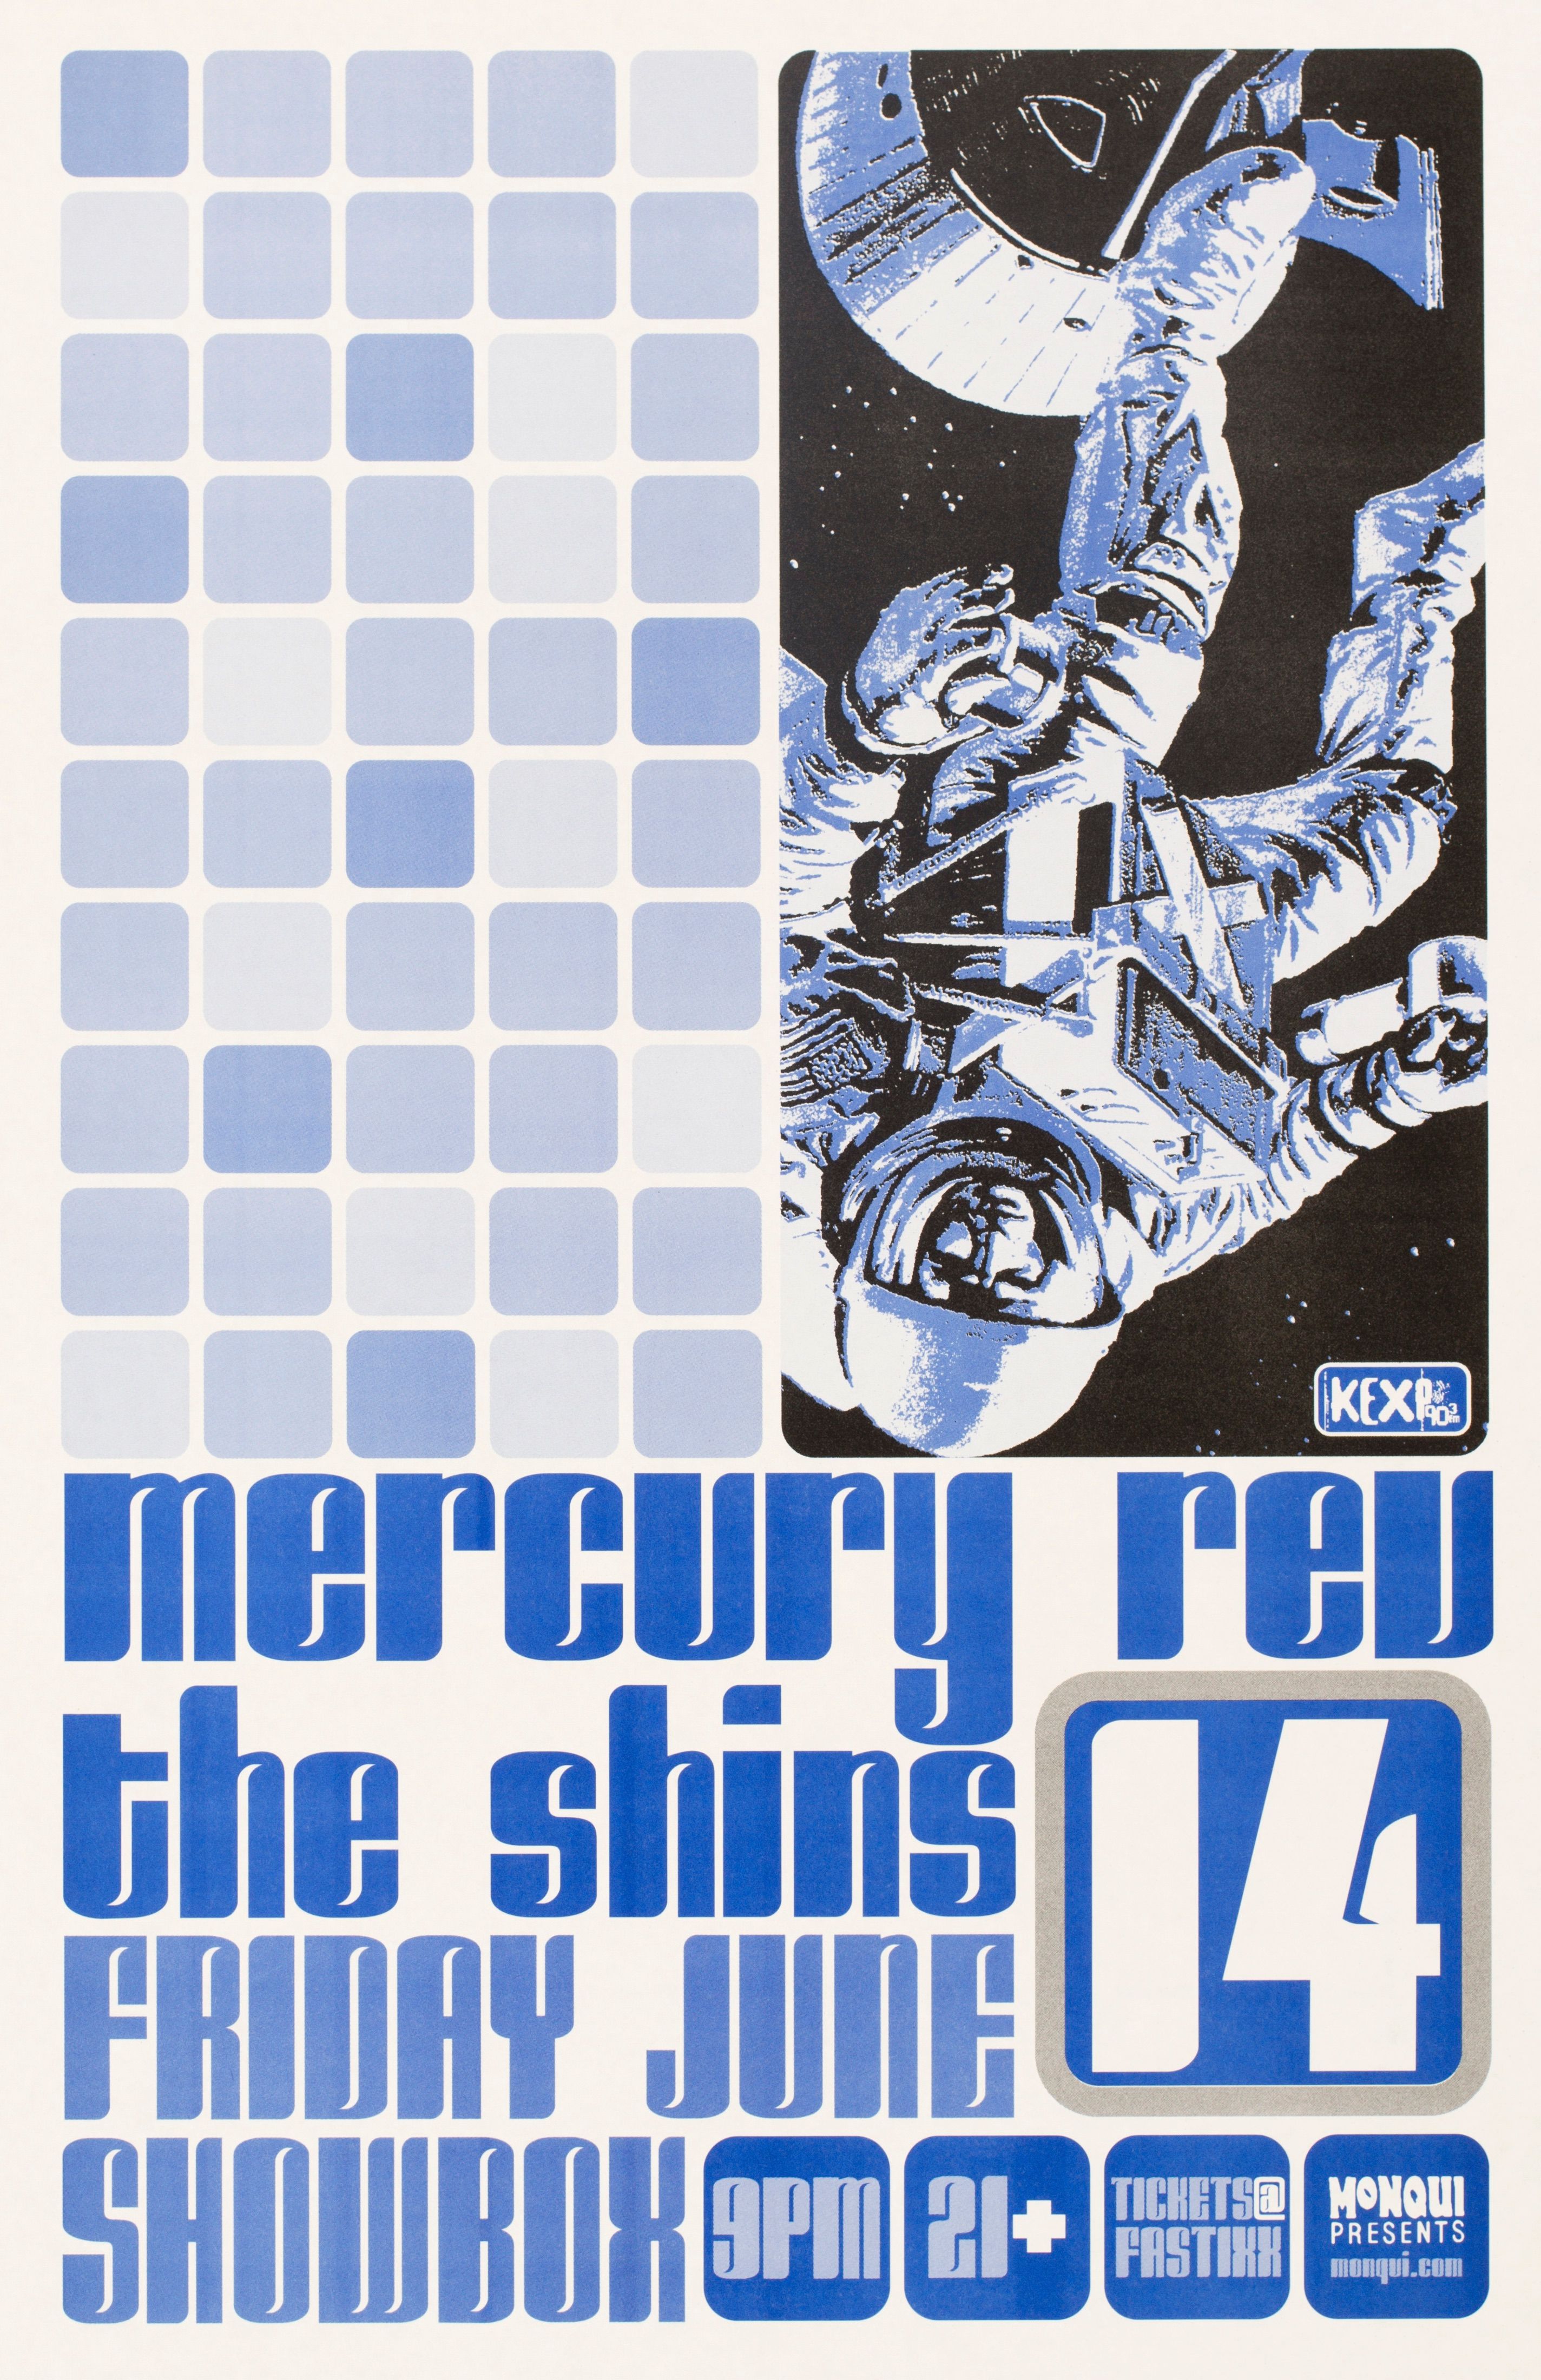 MXP-53.4 Mercury Rev 2002 Showbox  Jun 14 Concert Poster